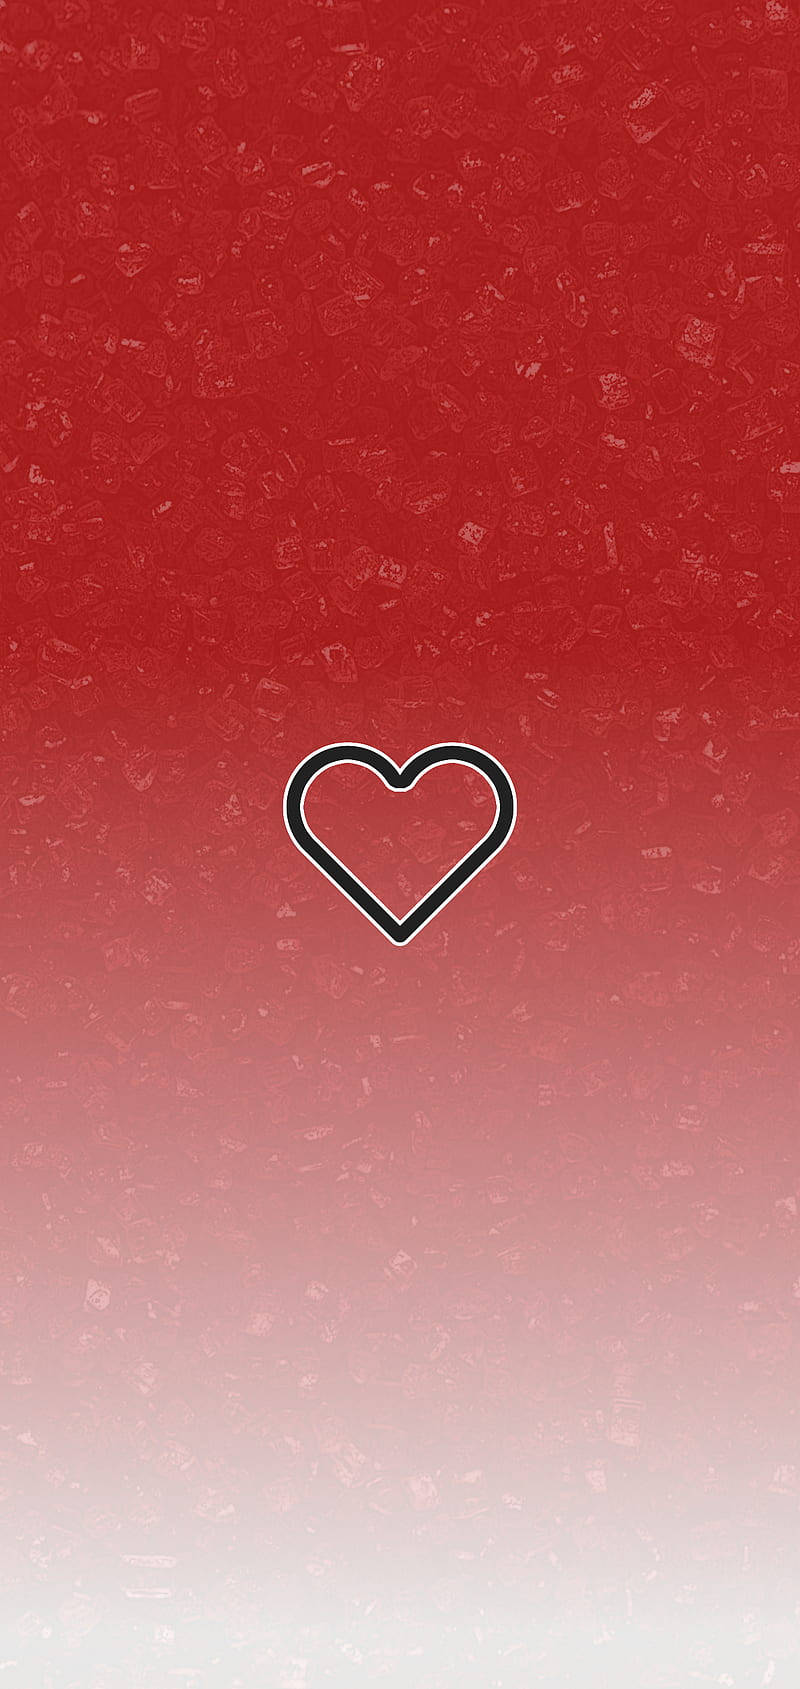 Cute Instagram Heart On Red